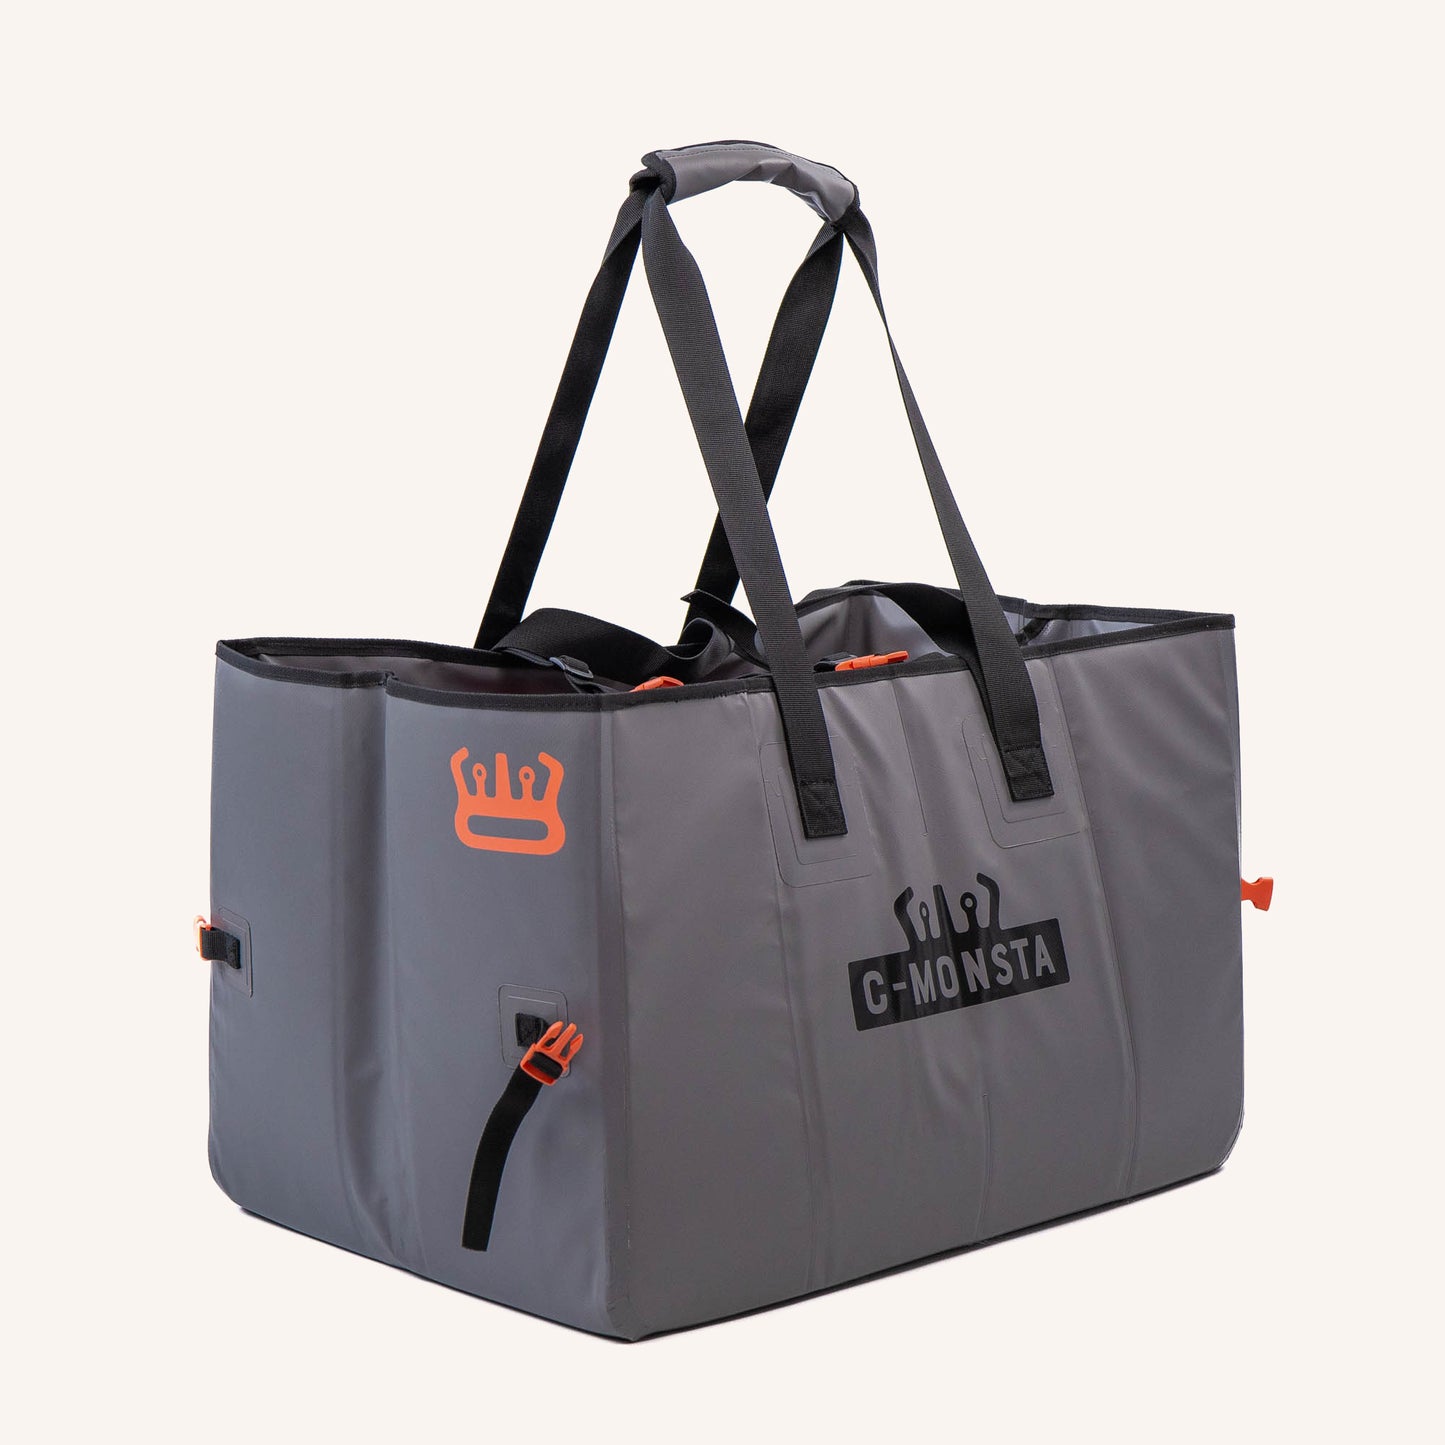 c-monsta Split Bag For Retailers x5 (US)